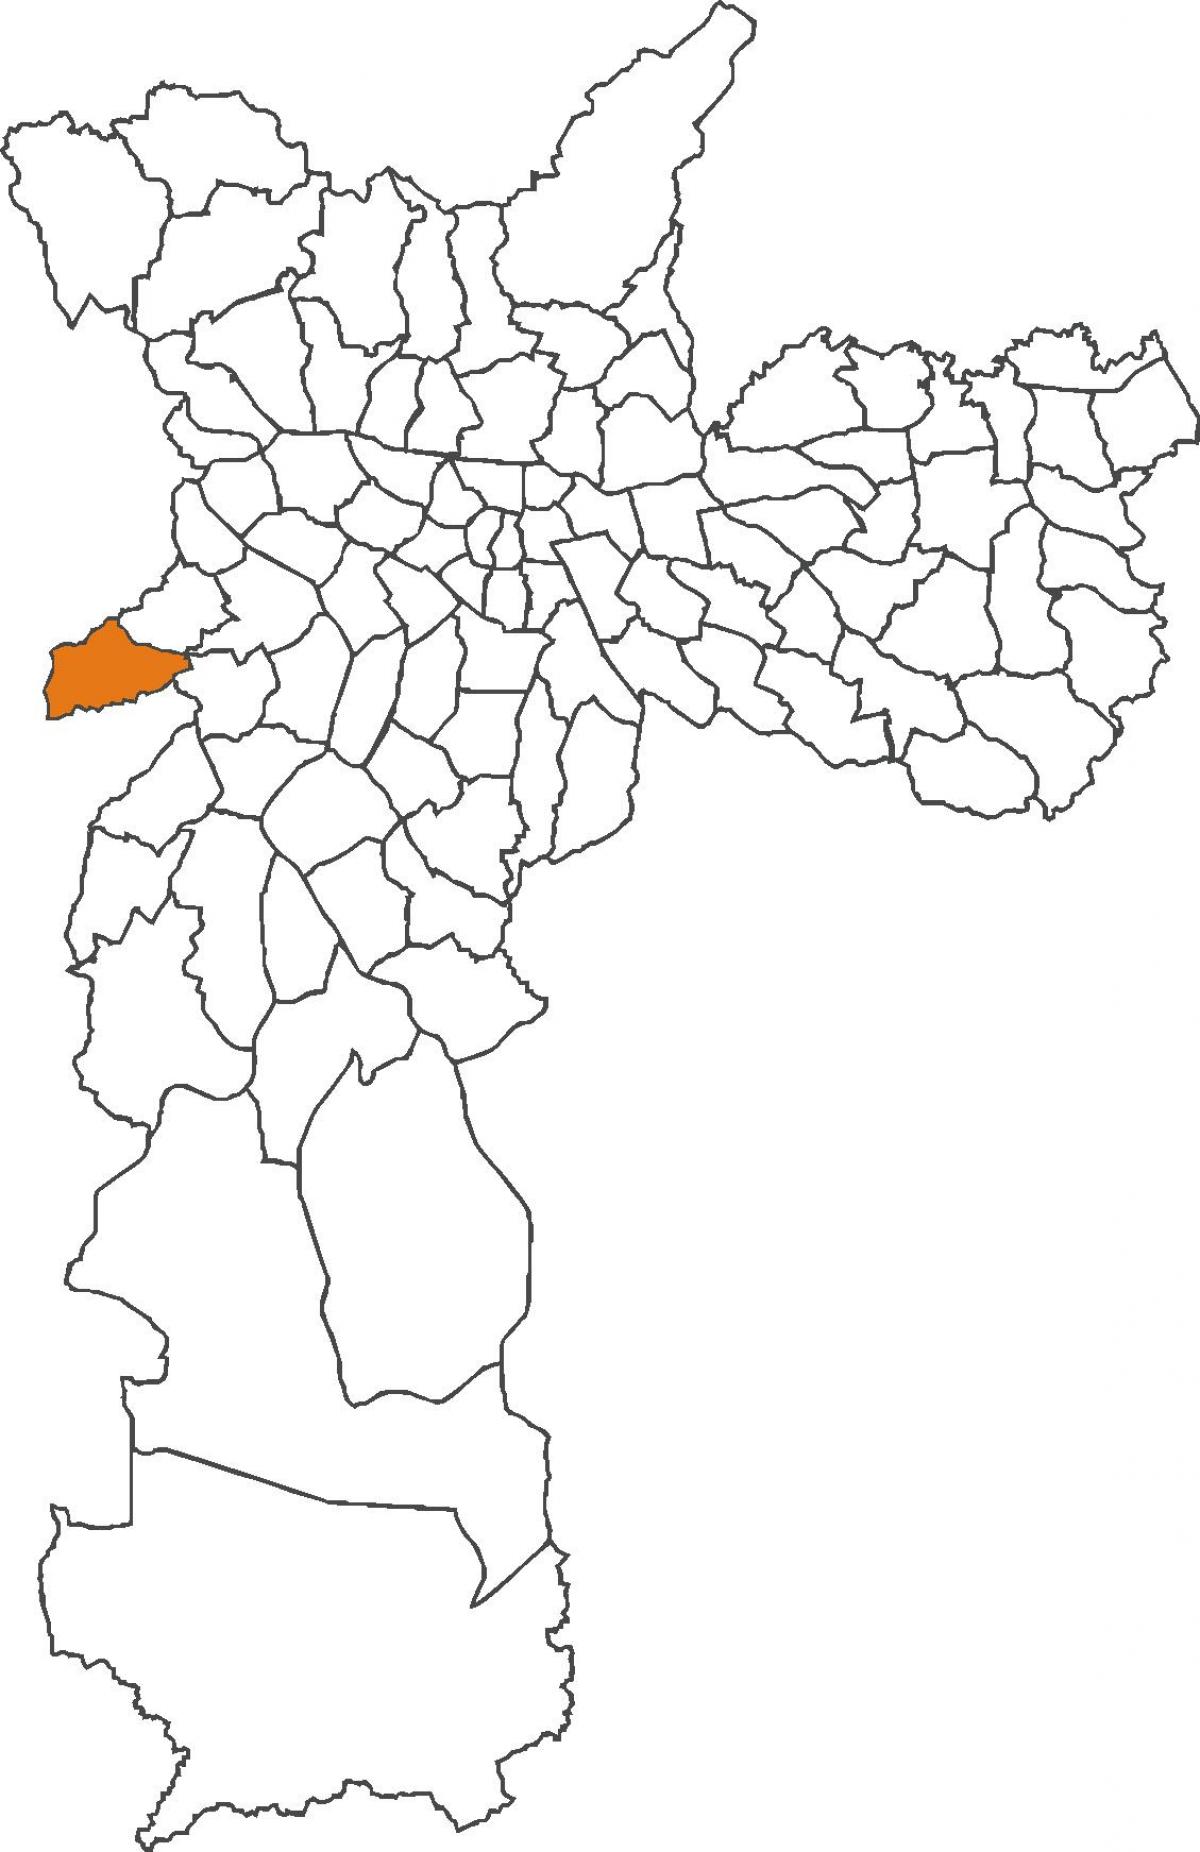 Map of Raposo Tavares district